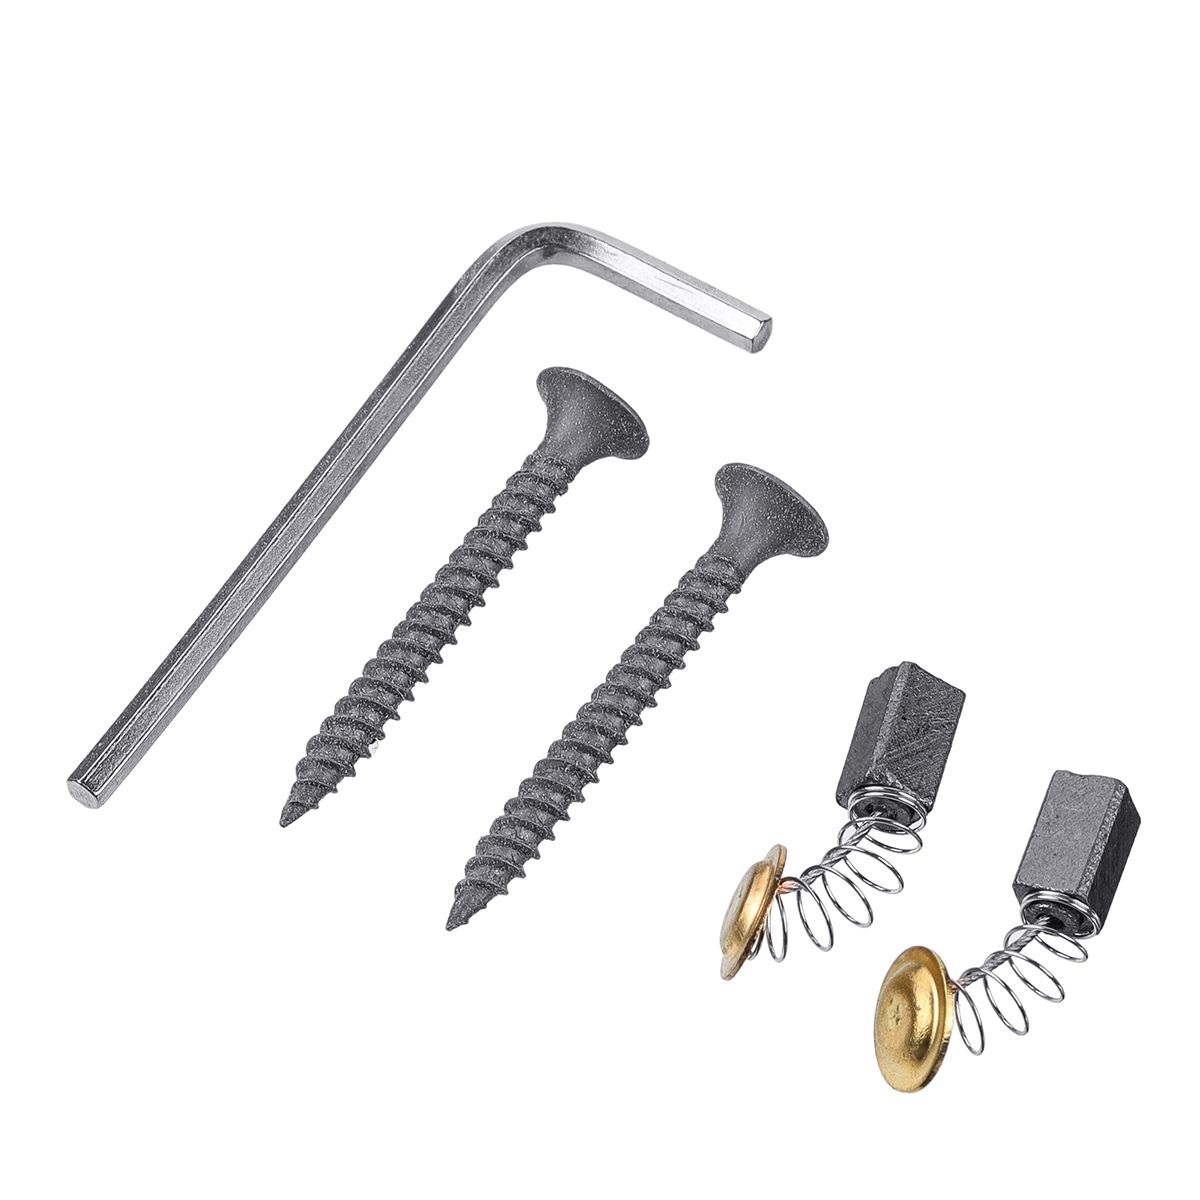 USEU-350W-Adjustable-Speed-Mini-Polishing-Machine-For-Dental-Jewelry-Motor-Lathe-Bench-Grinder-Kit-1347518